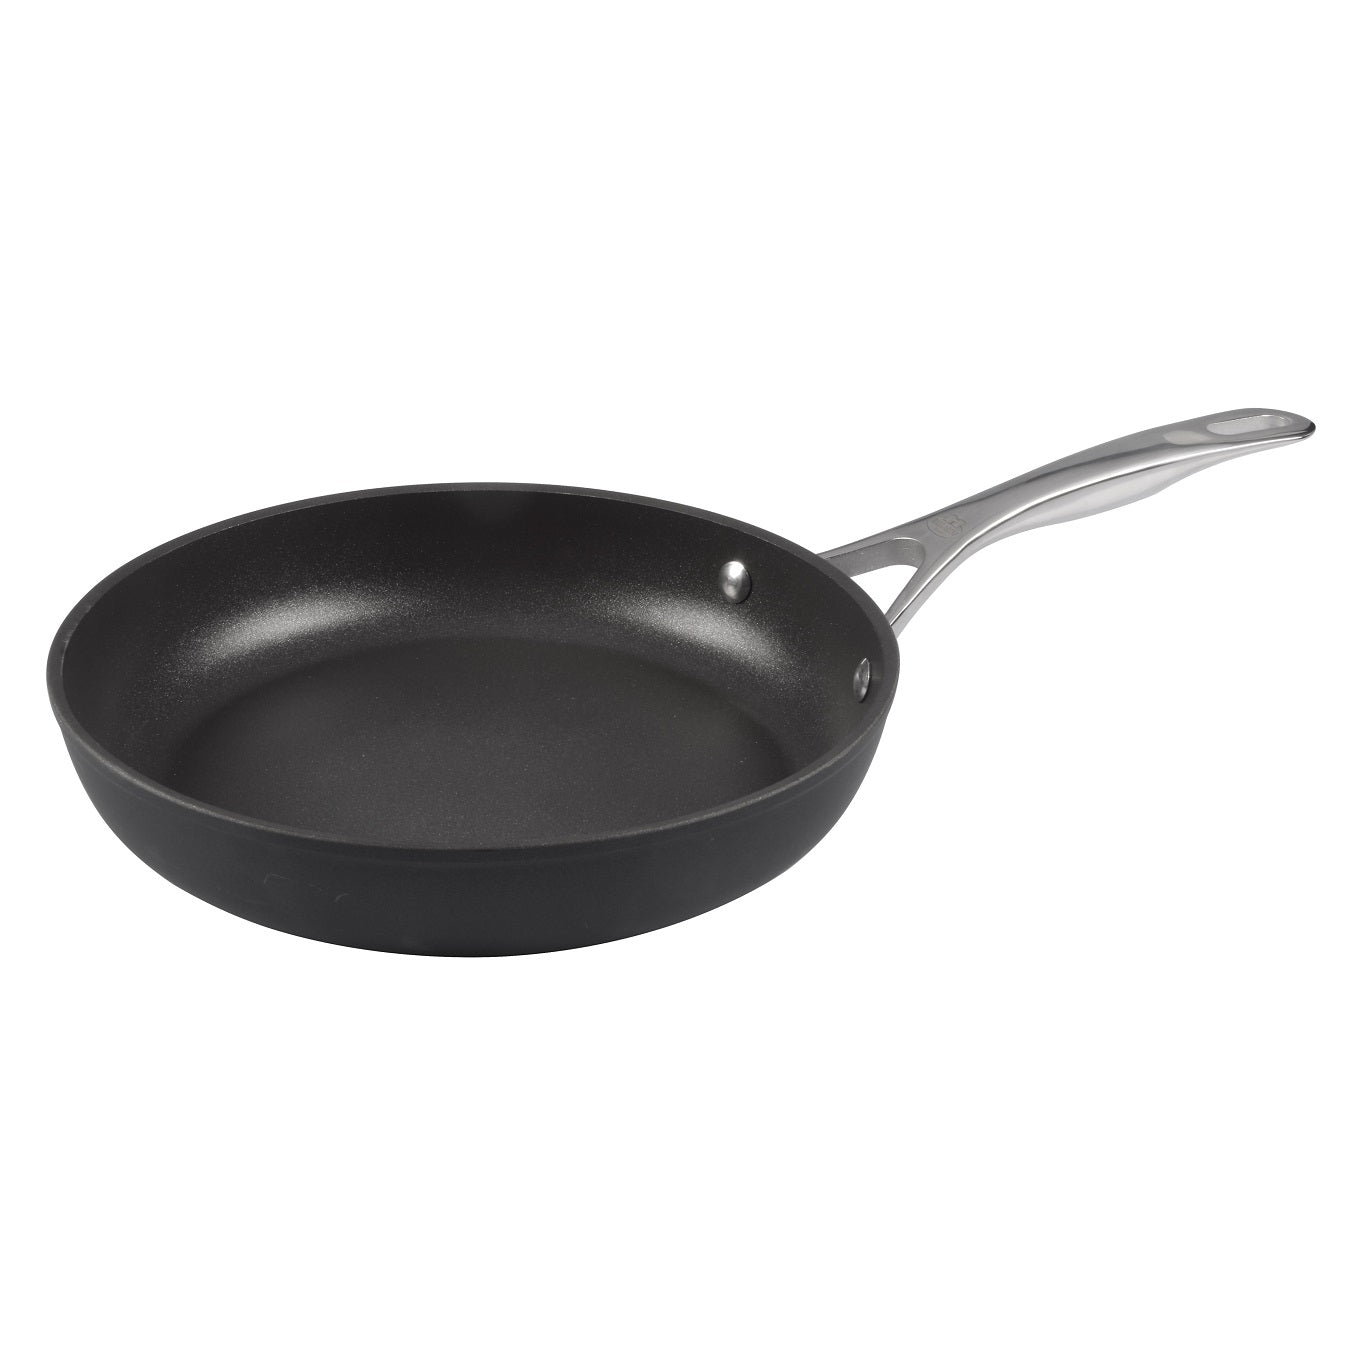 Ballarini Non-stick Aluminum Frying Pan with Long Handle, Alba Line, 26 cm